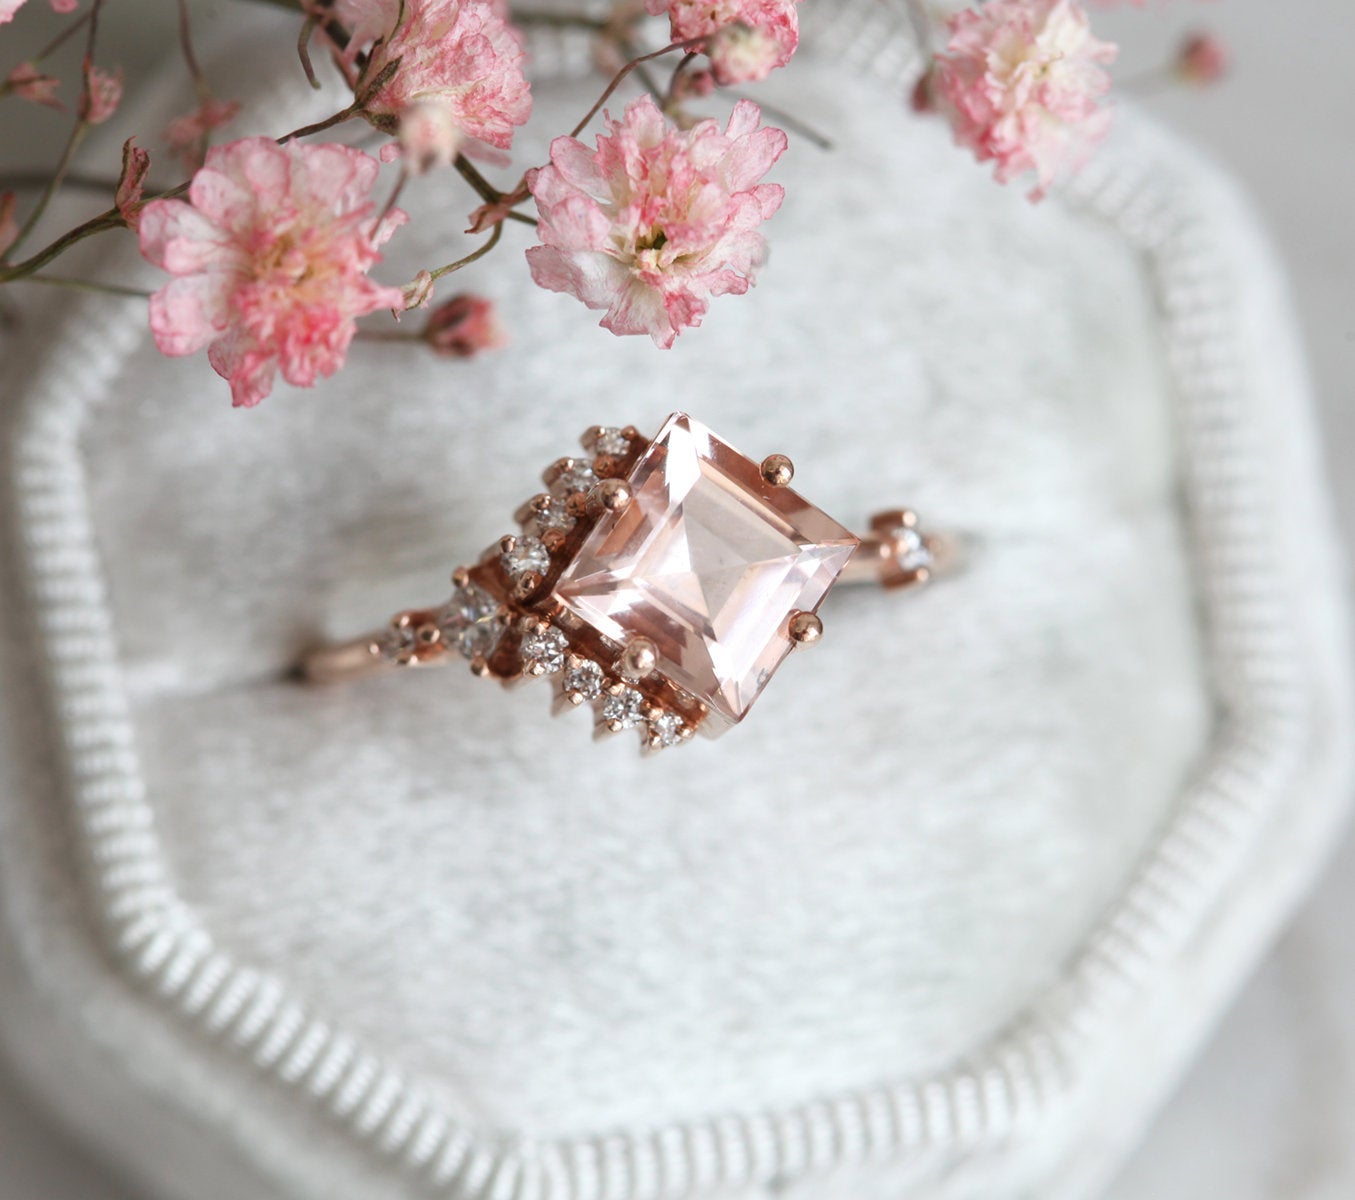 Peach morganite and diamond cluster ring